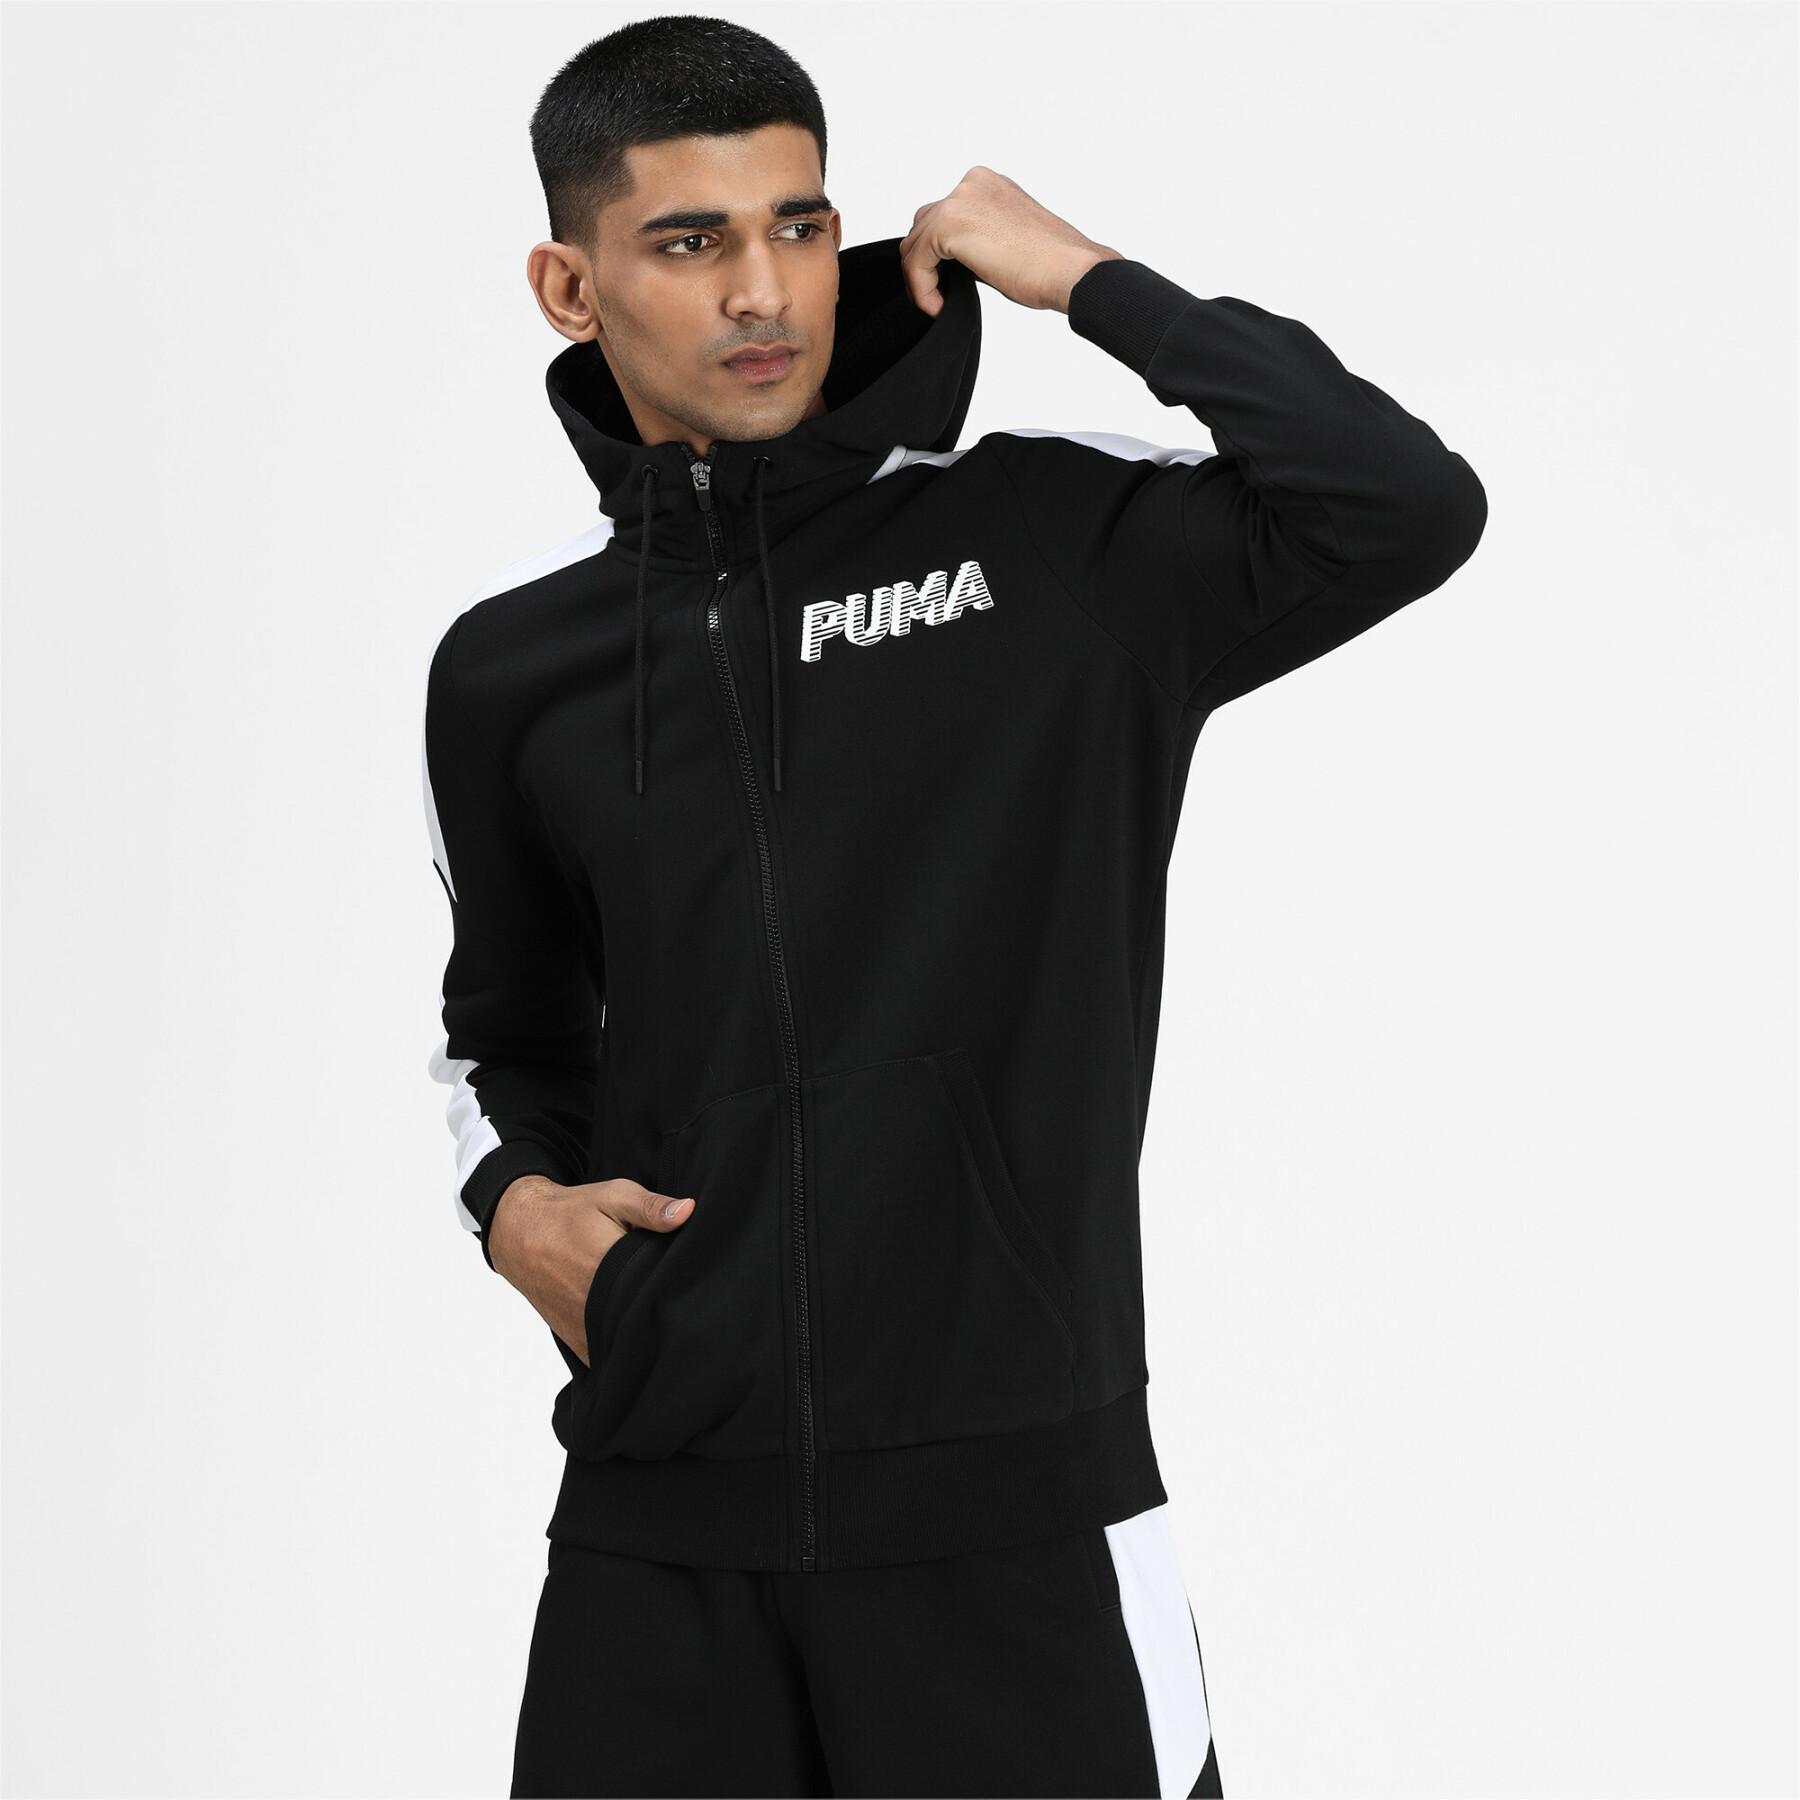 Full-zip sweatshirt Puma Modern Sport